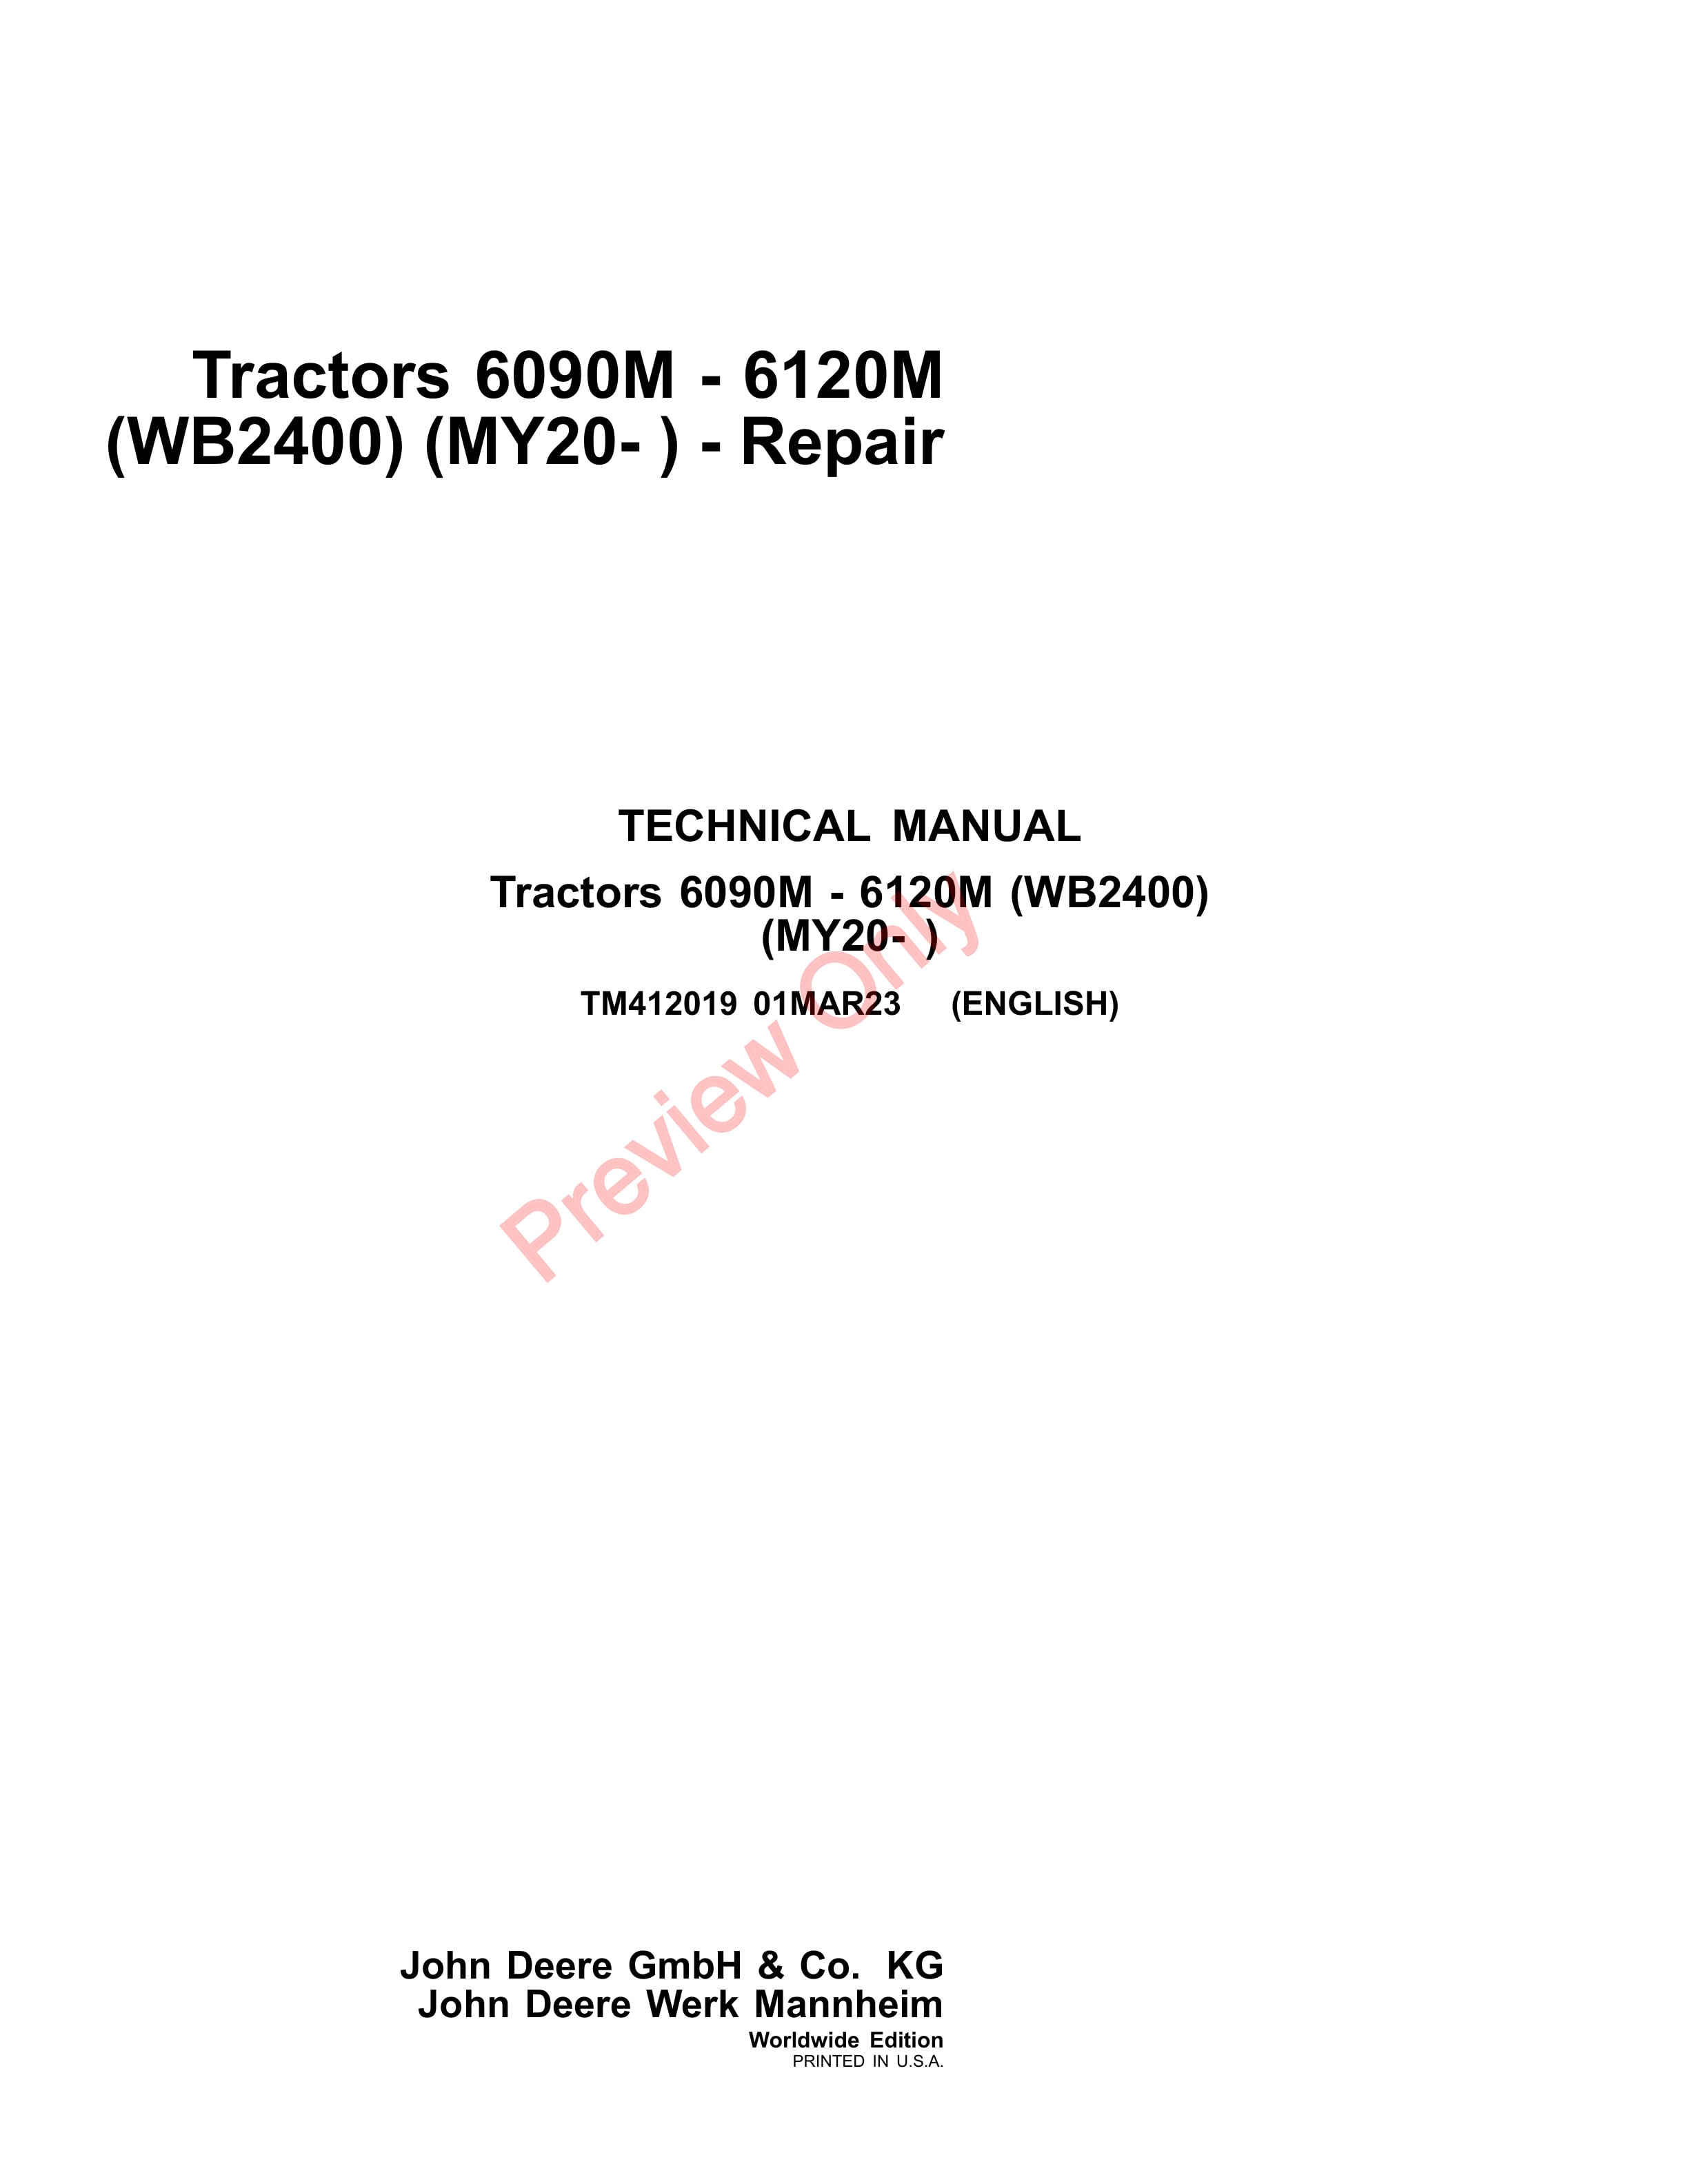 John Deere Tractors 6090M 6120M WB2400 MY20 Technical Manual TM412019 01MAR23 1